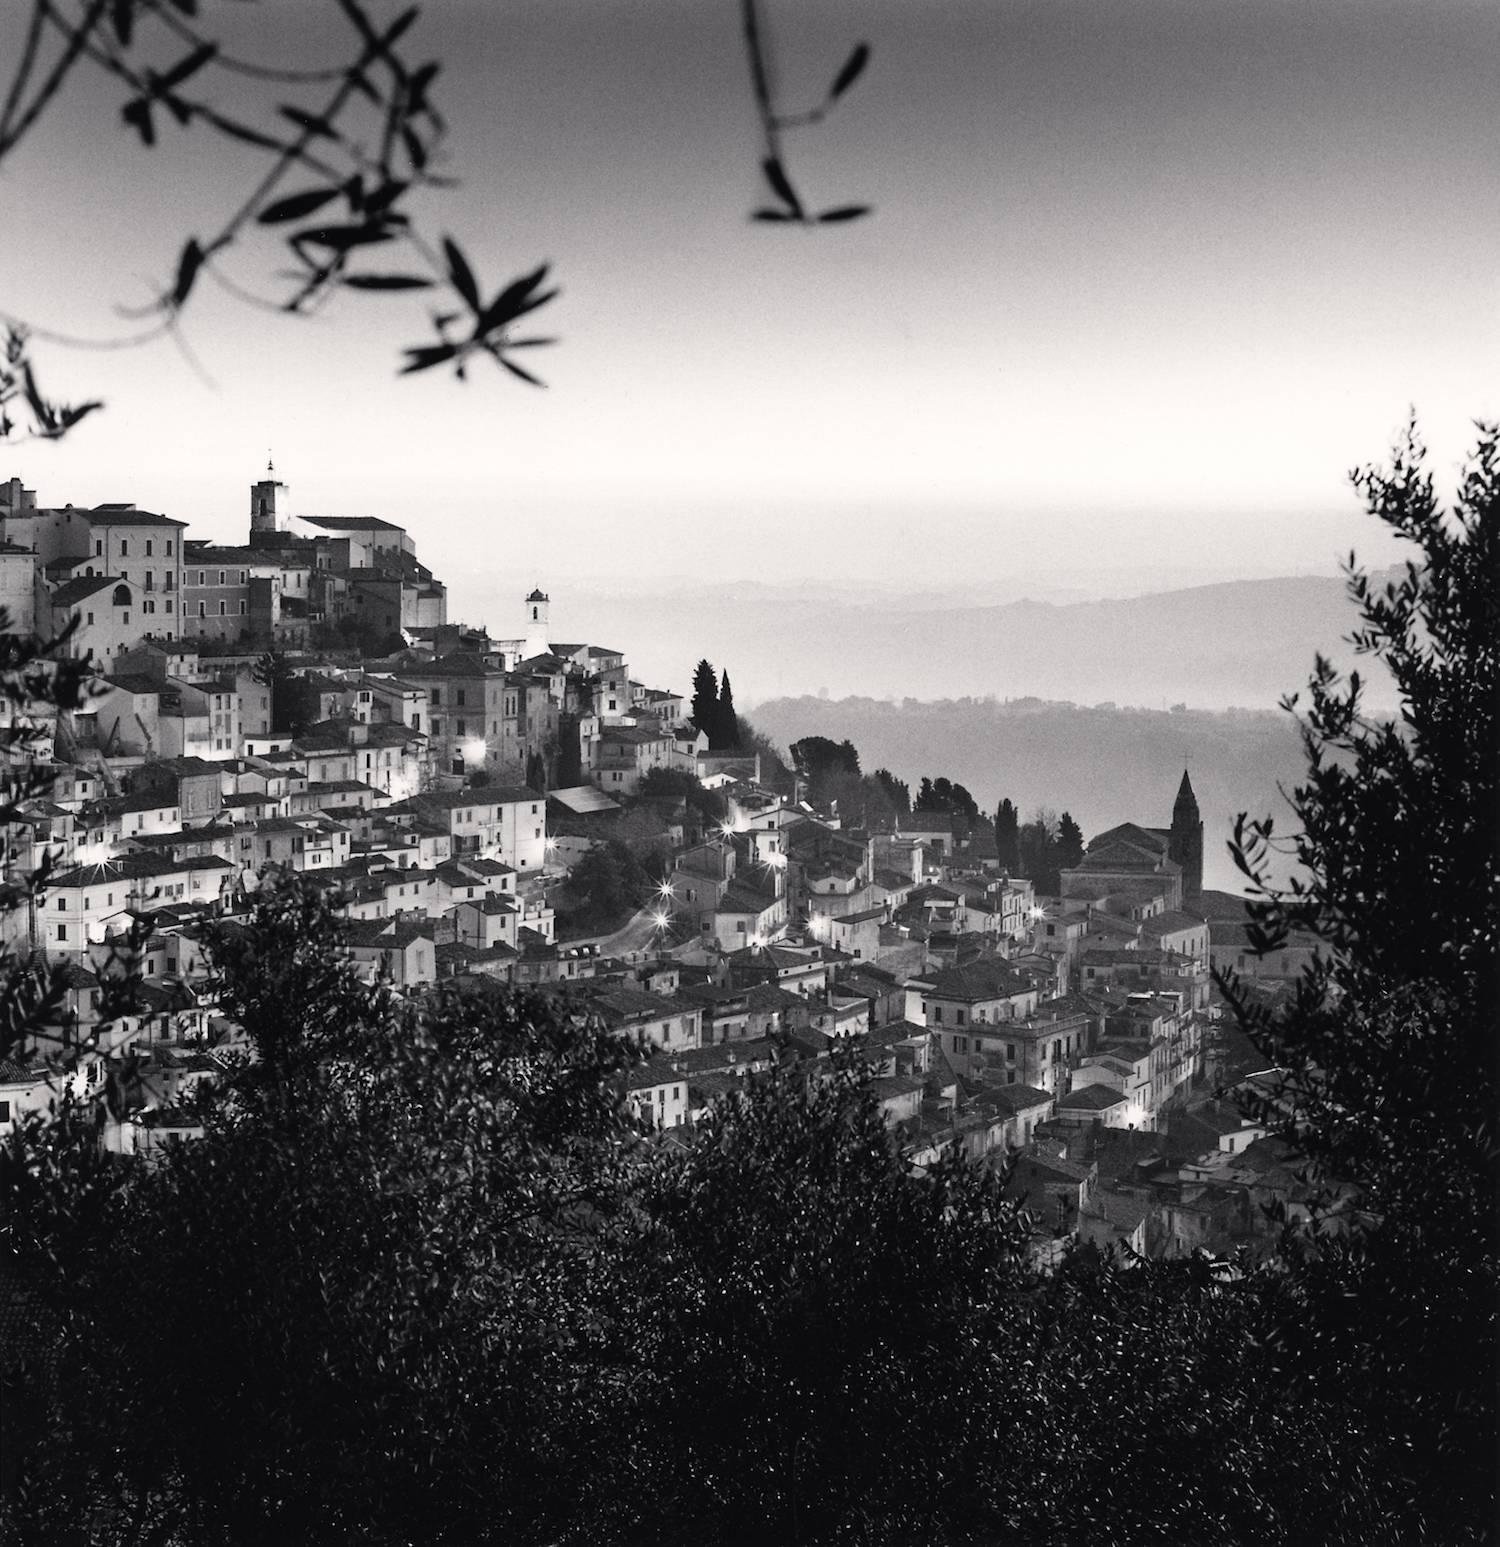 Michael Kenna Black and White Photograph - Dawn Light, Loreto Aprutino, Abruzzo, Italy